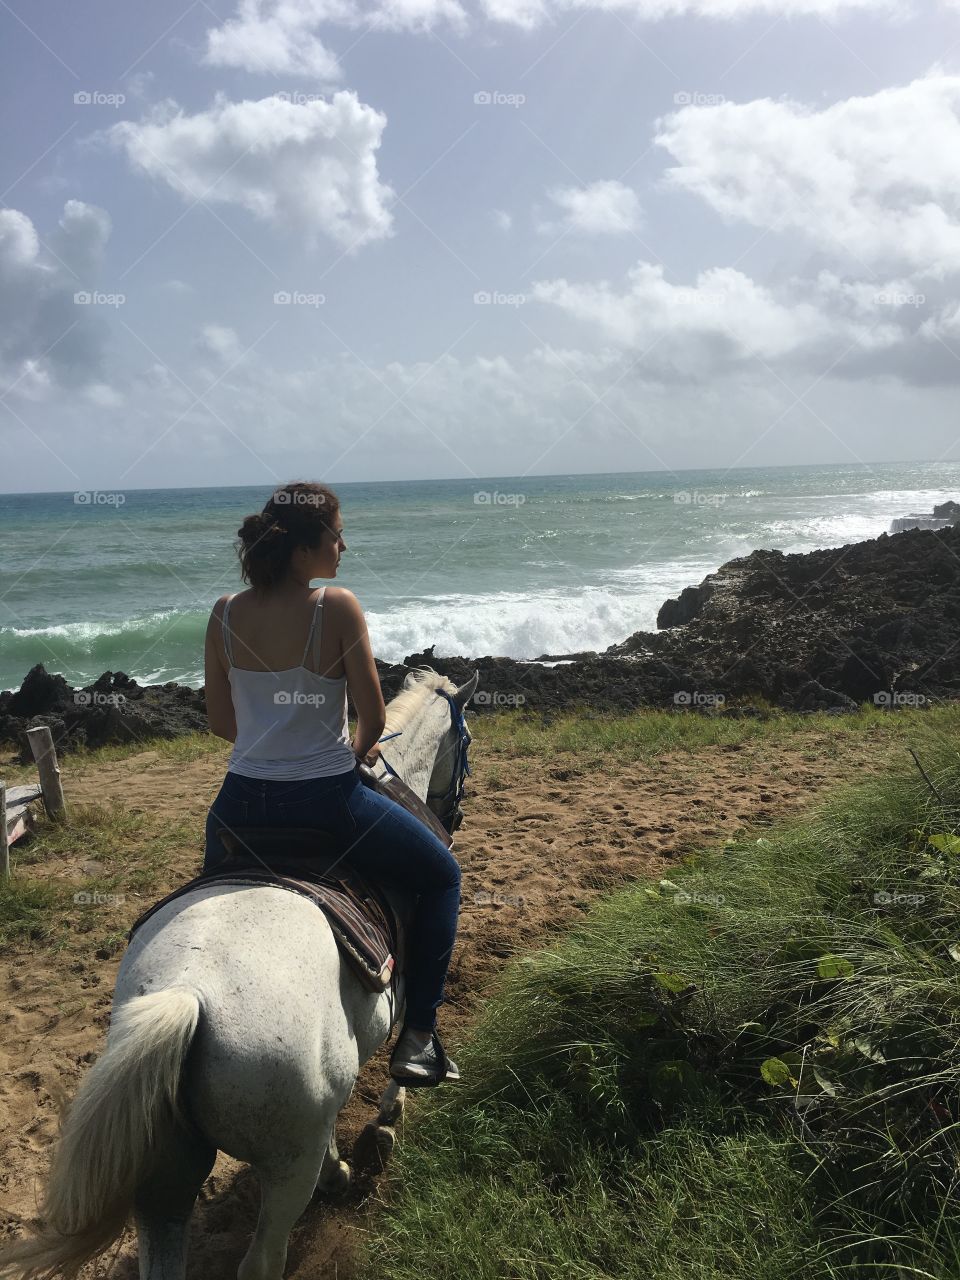 Beach Life 
Horse Back Ride